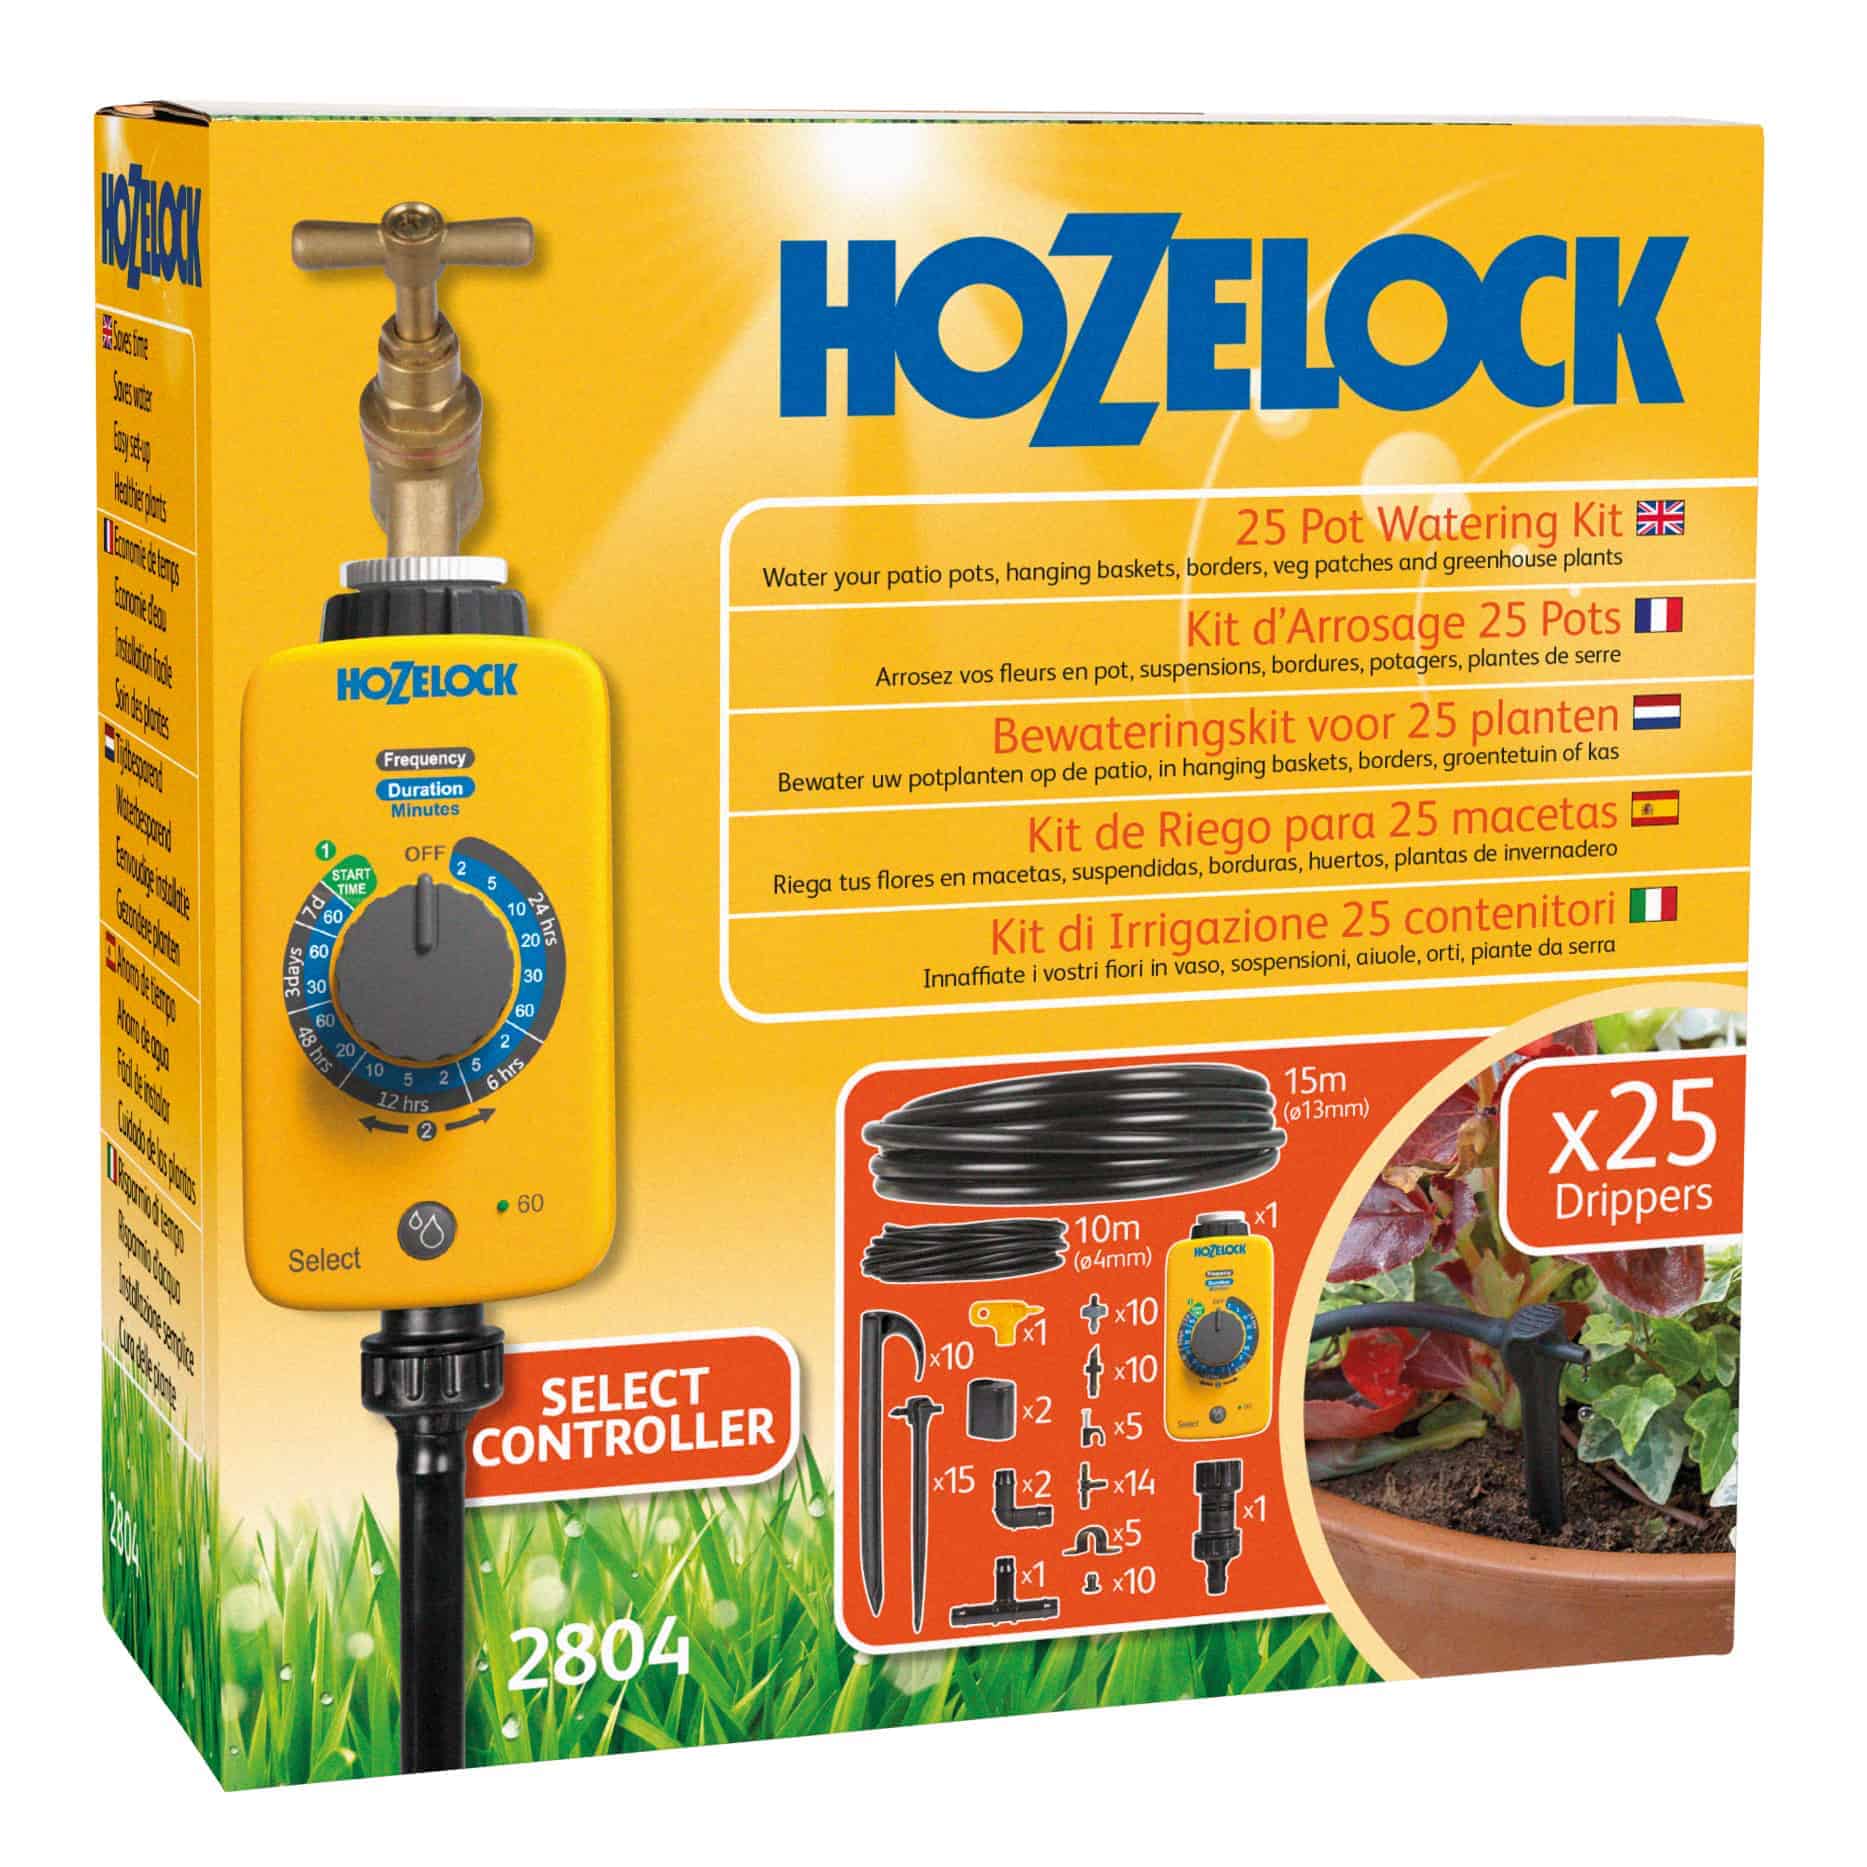 Hozelock 25 Pot Watering Kit - 2804